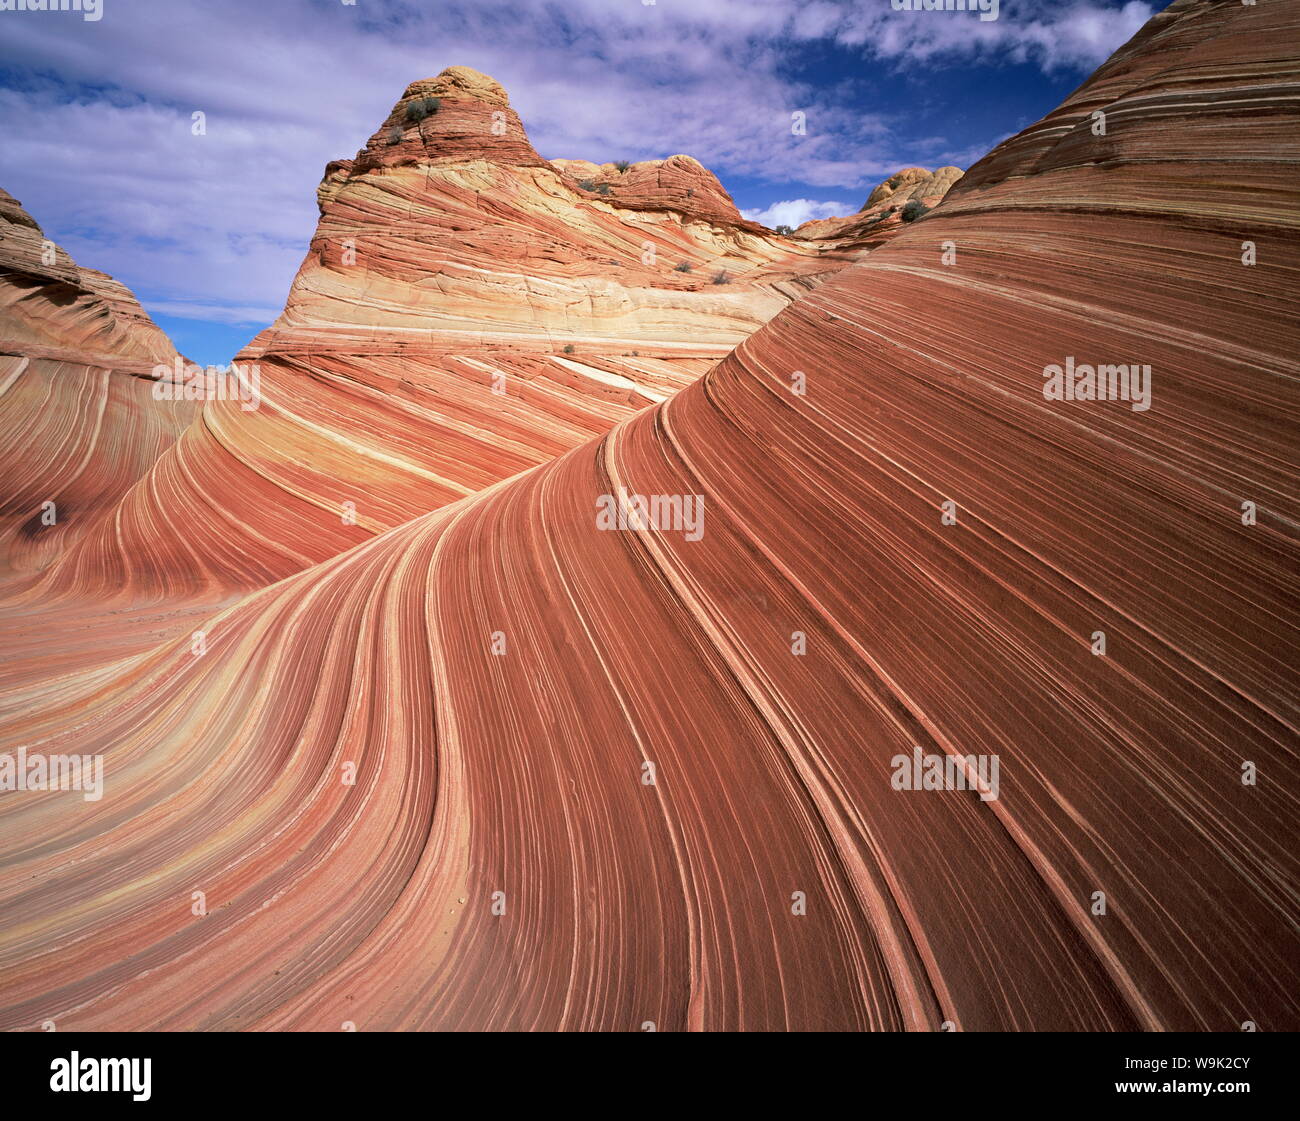 Sandstone wave, Paria Canyon, Vermillion Cliffs Wilderness, Arizona, United States of America (U.S.A.), North America Stock Photo